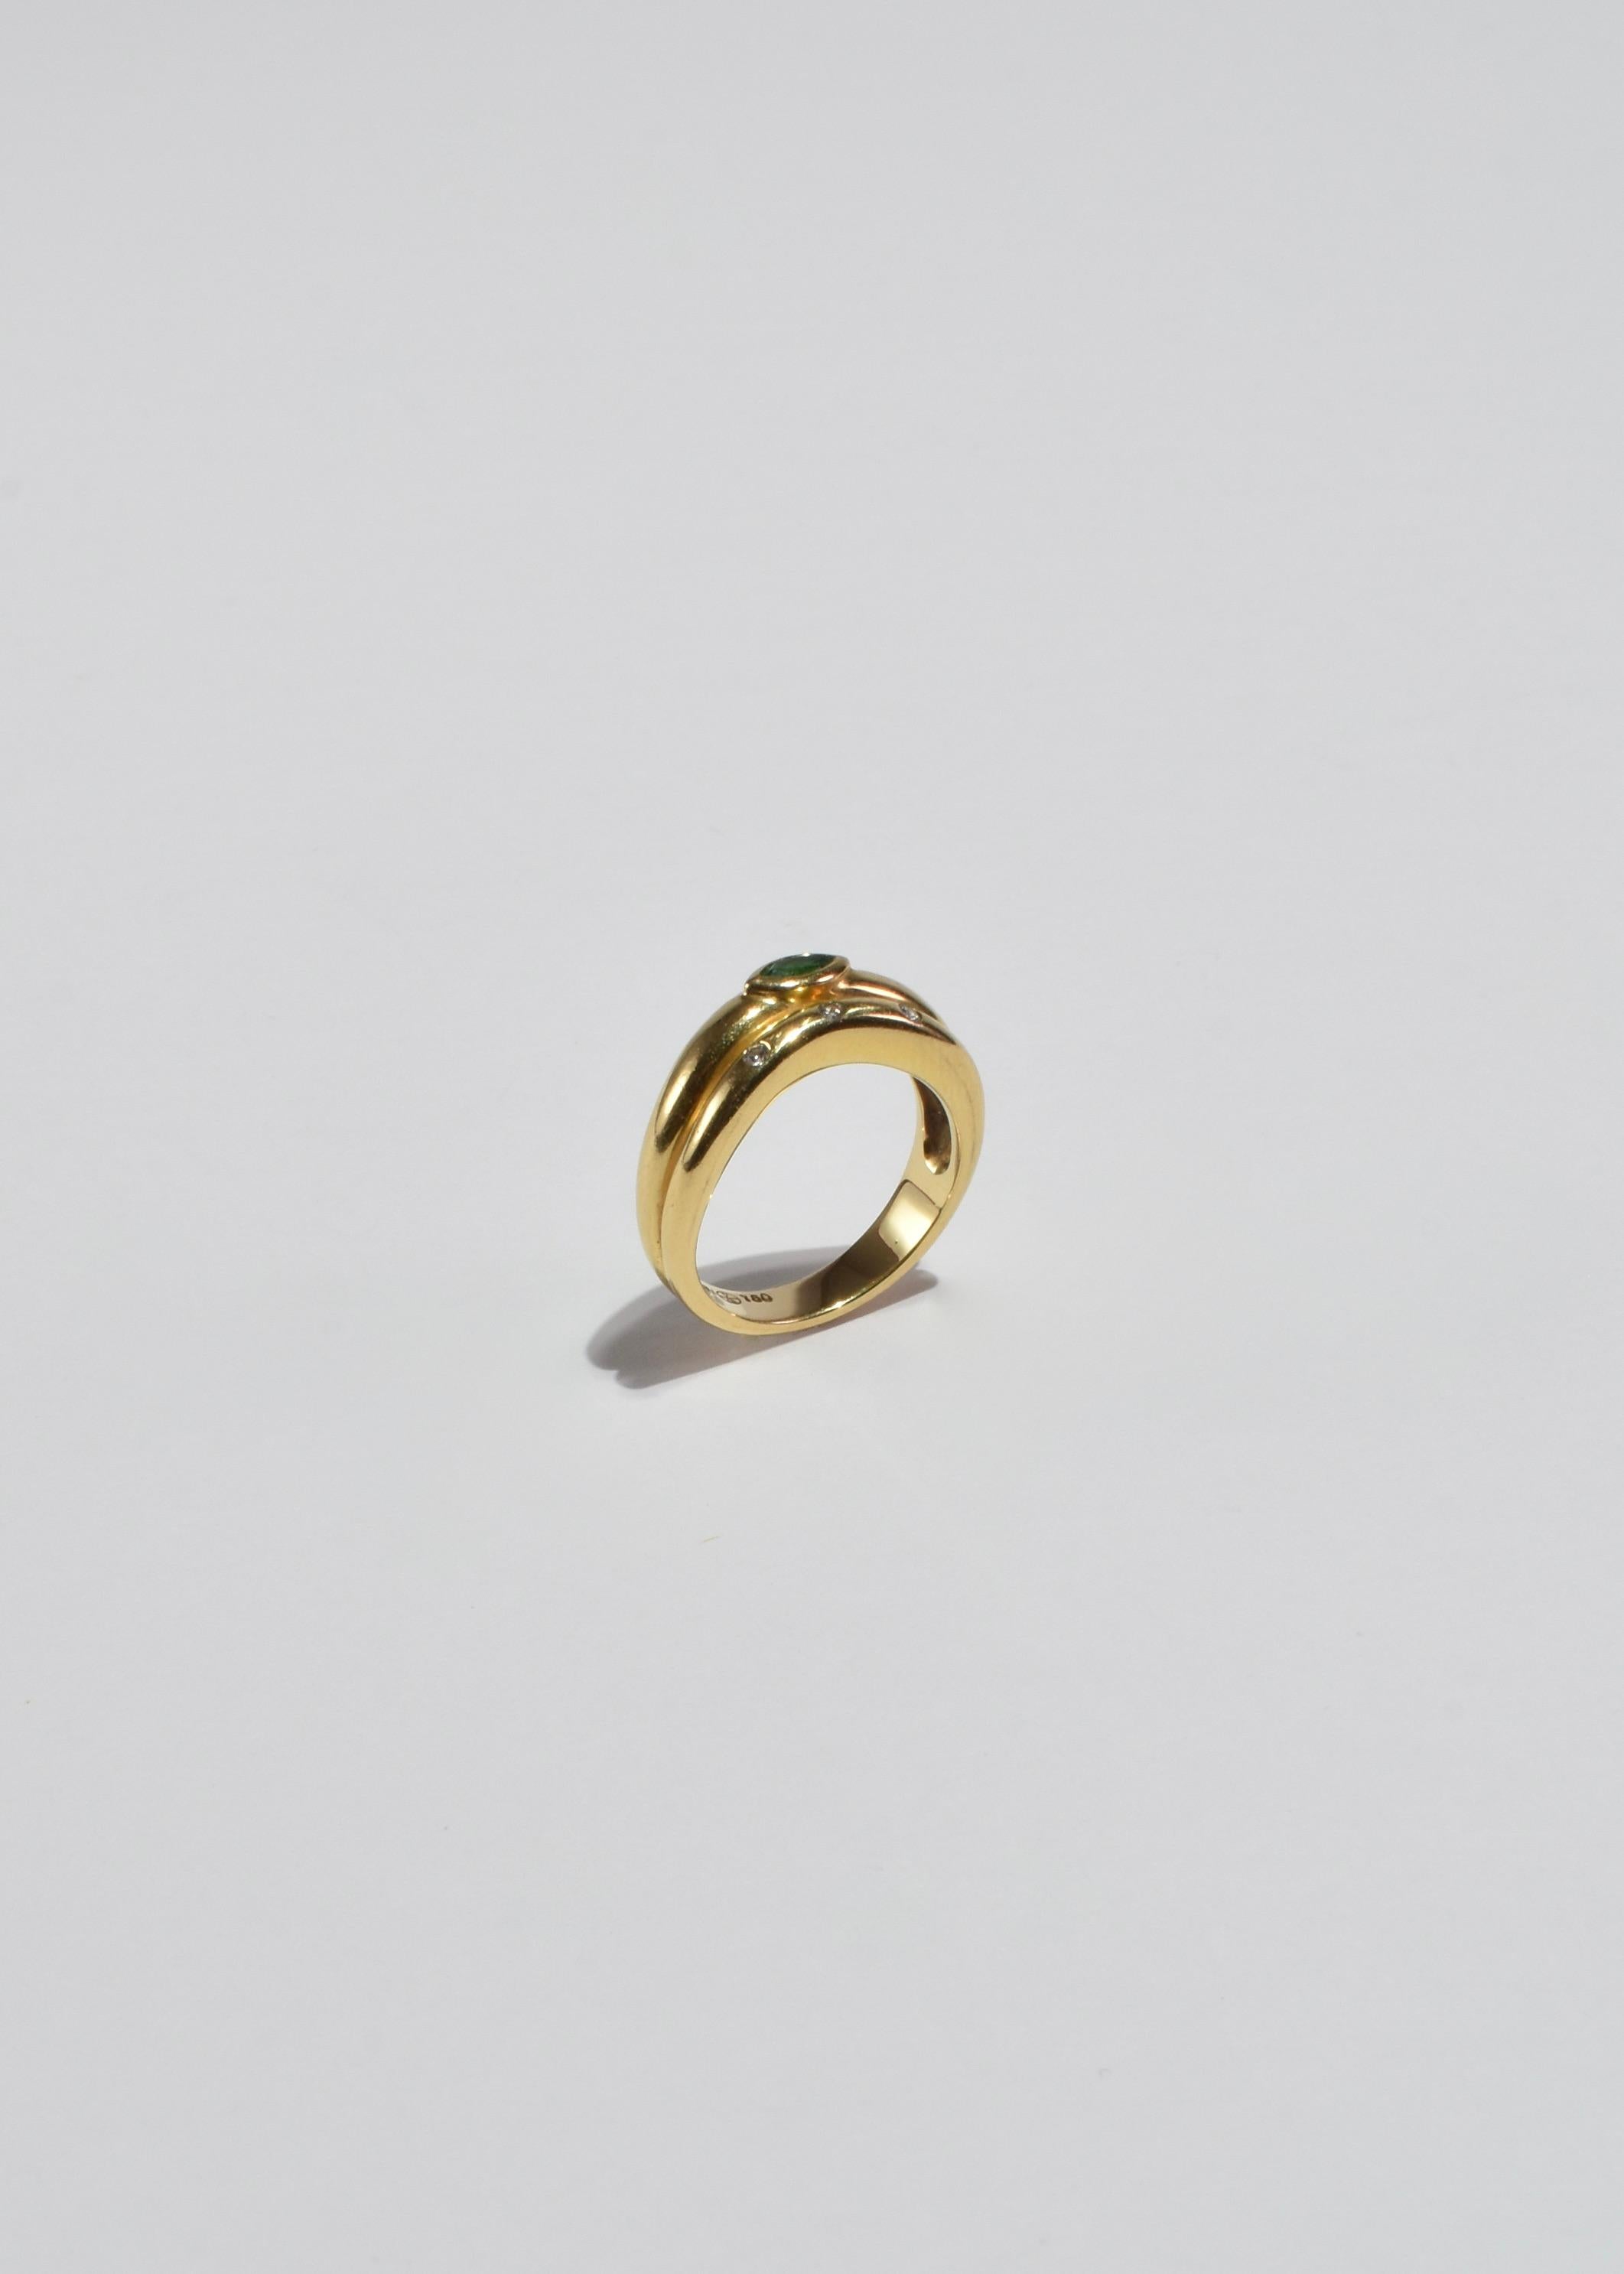 Emerald Cut Gold Emerald Diamond Ring For Sale